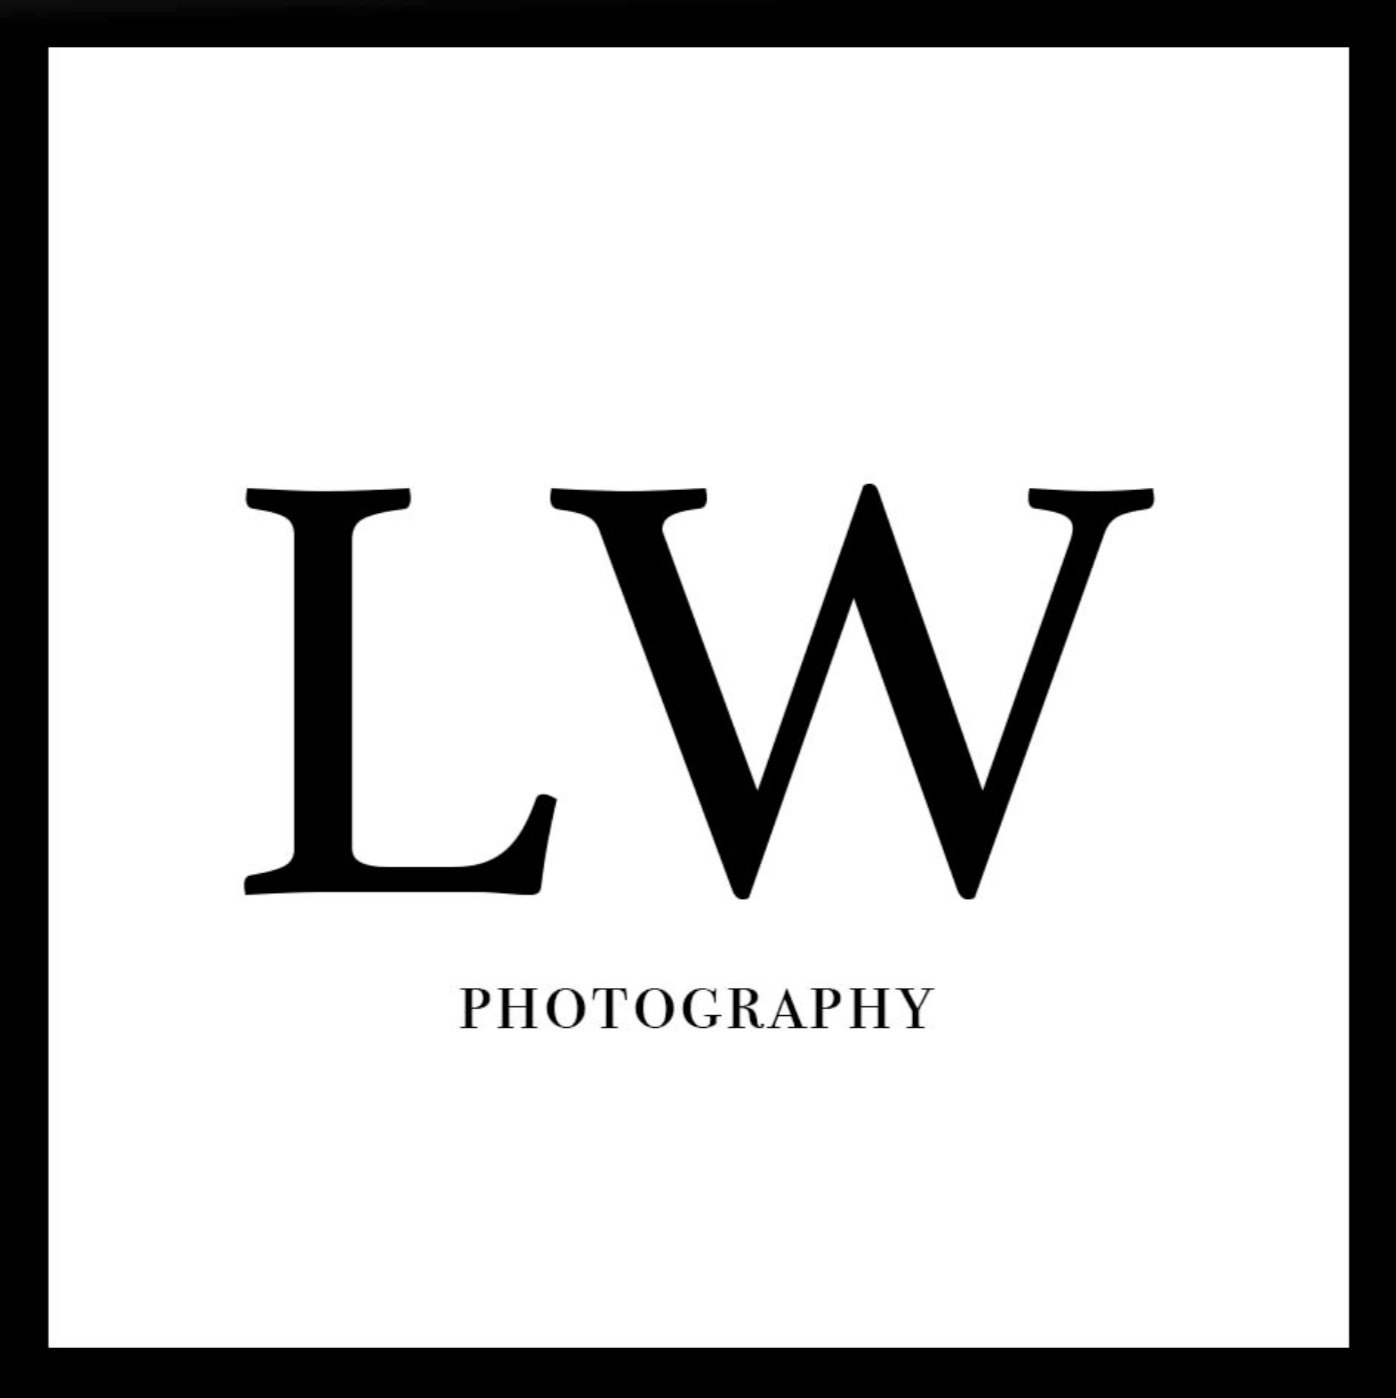 Leon W Photography